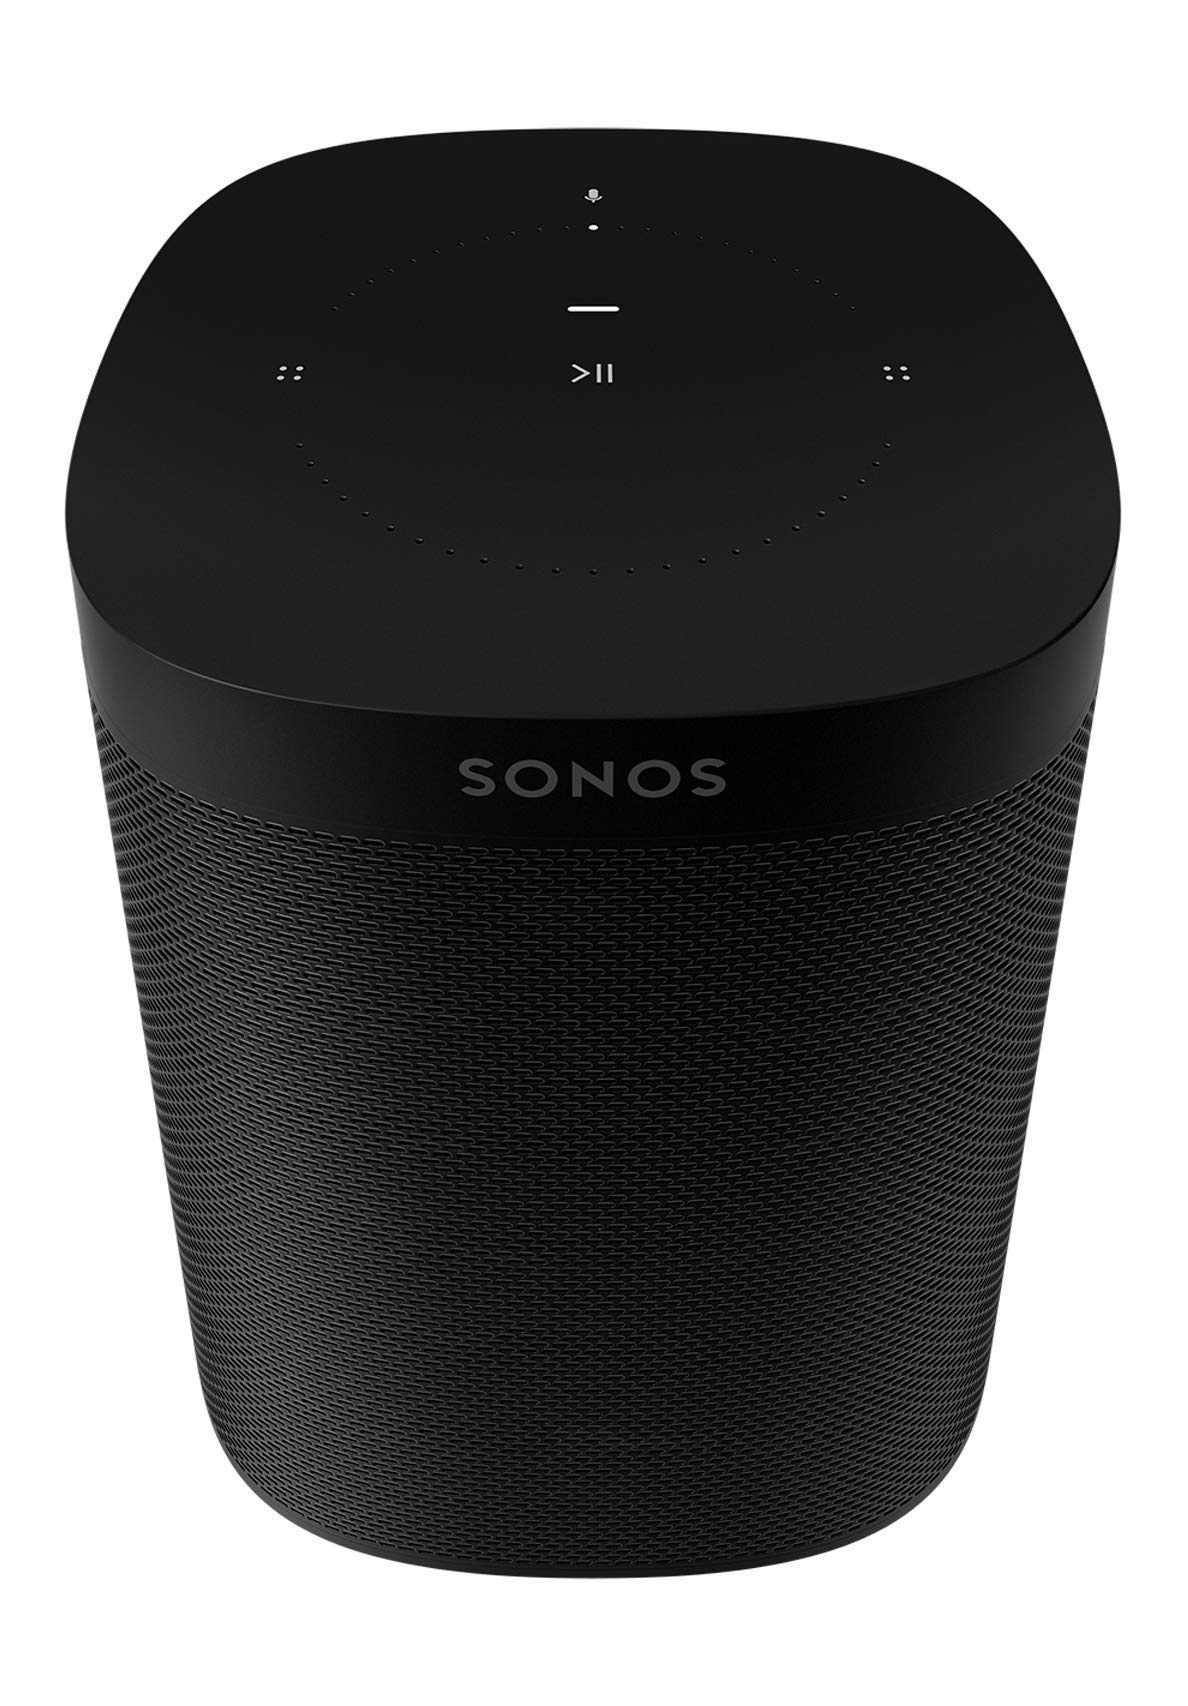 Amazon Echo Plus (2nd gen) vs Sonos One Gen 2 (2019) - Slant